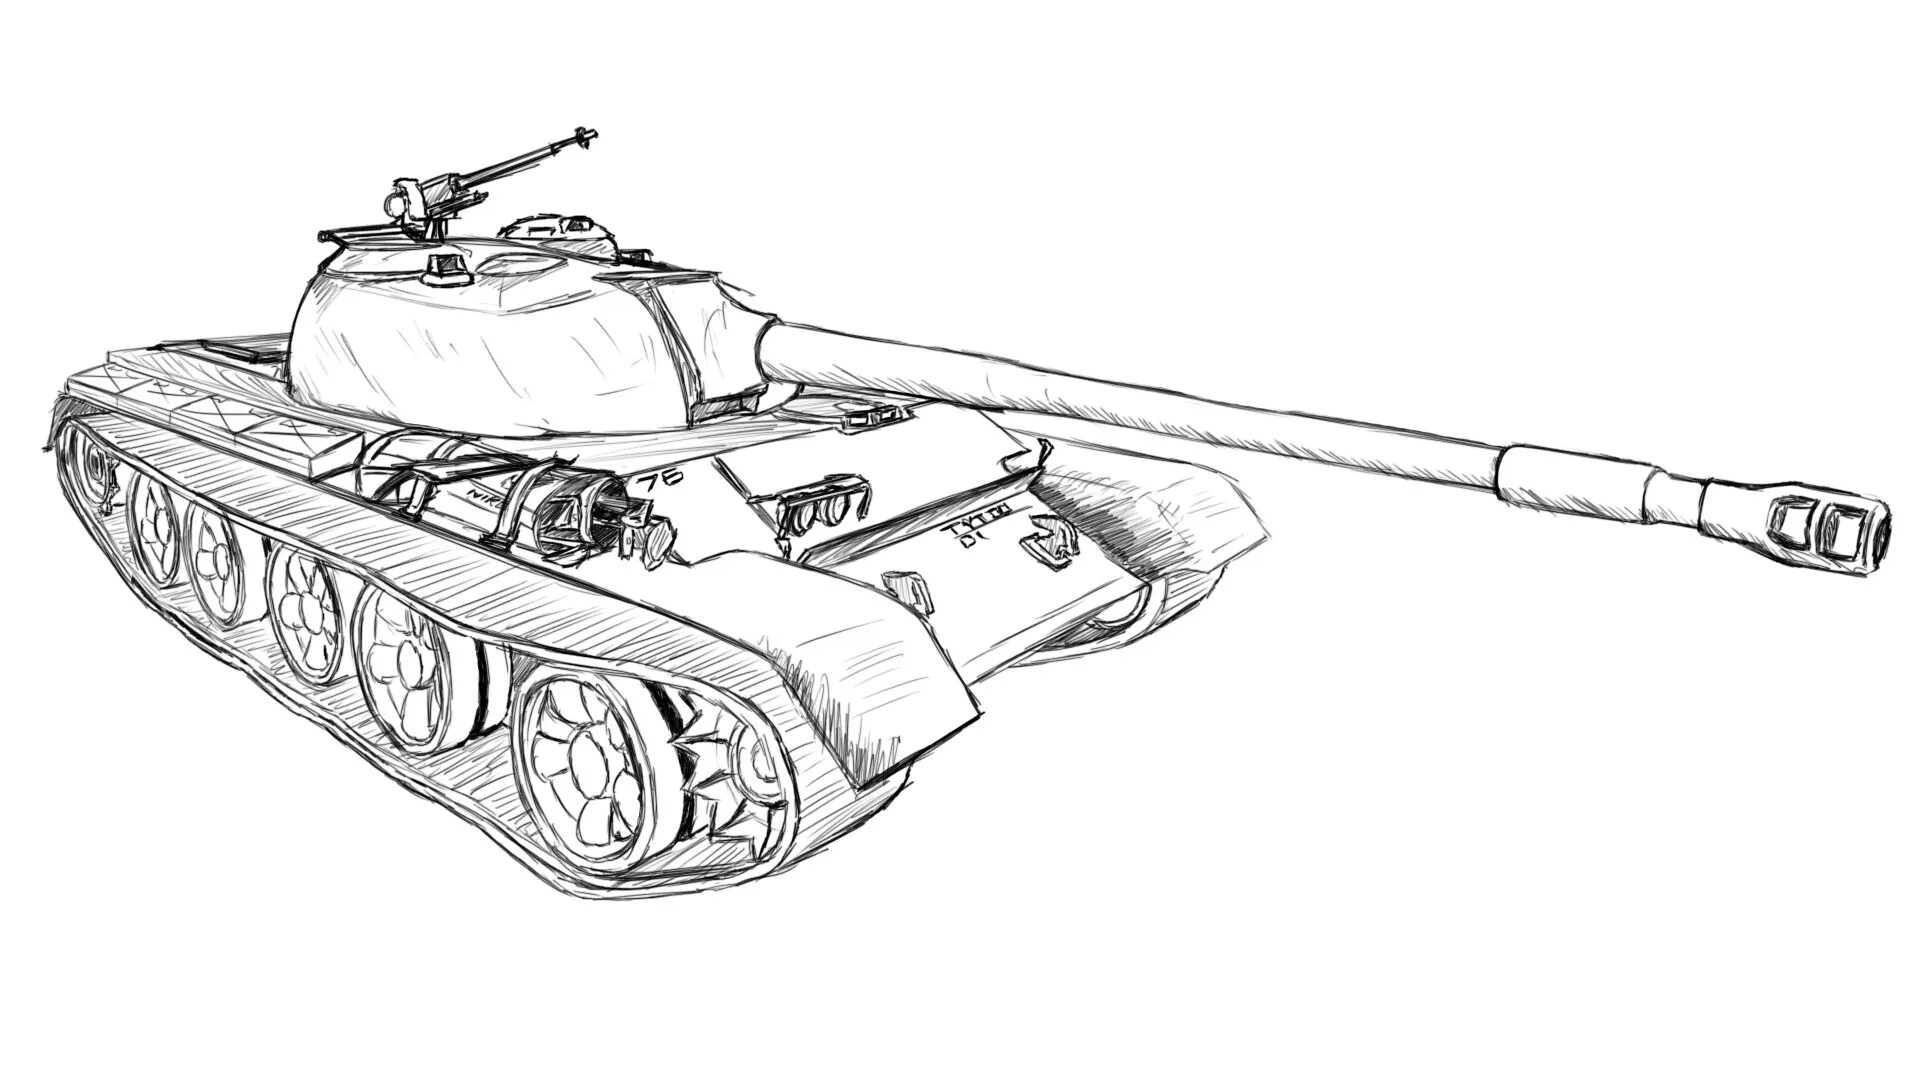 Ис легко. Раскраски танков World of Tanks т34. Танк т-34 рисунок. Раскраски танки ворлд оф танк. Раскраска танков в World of Tanks.